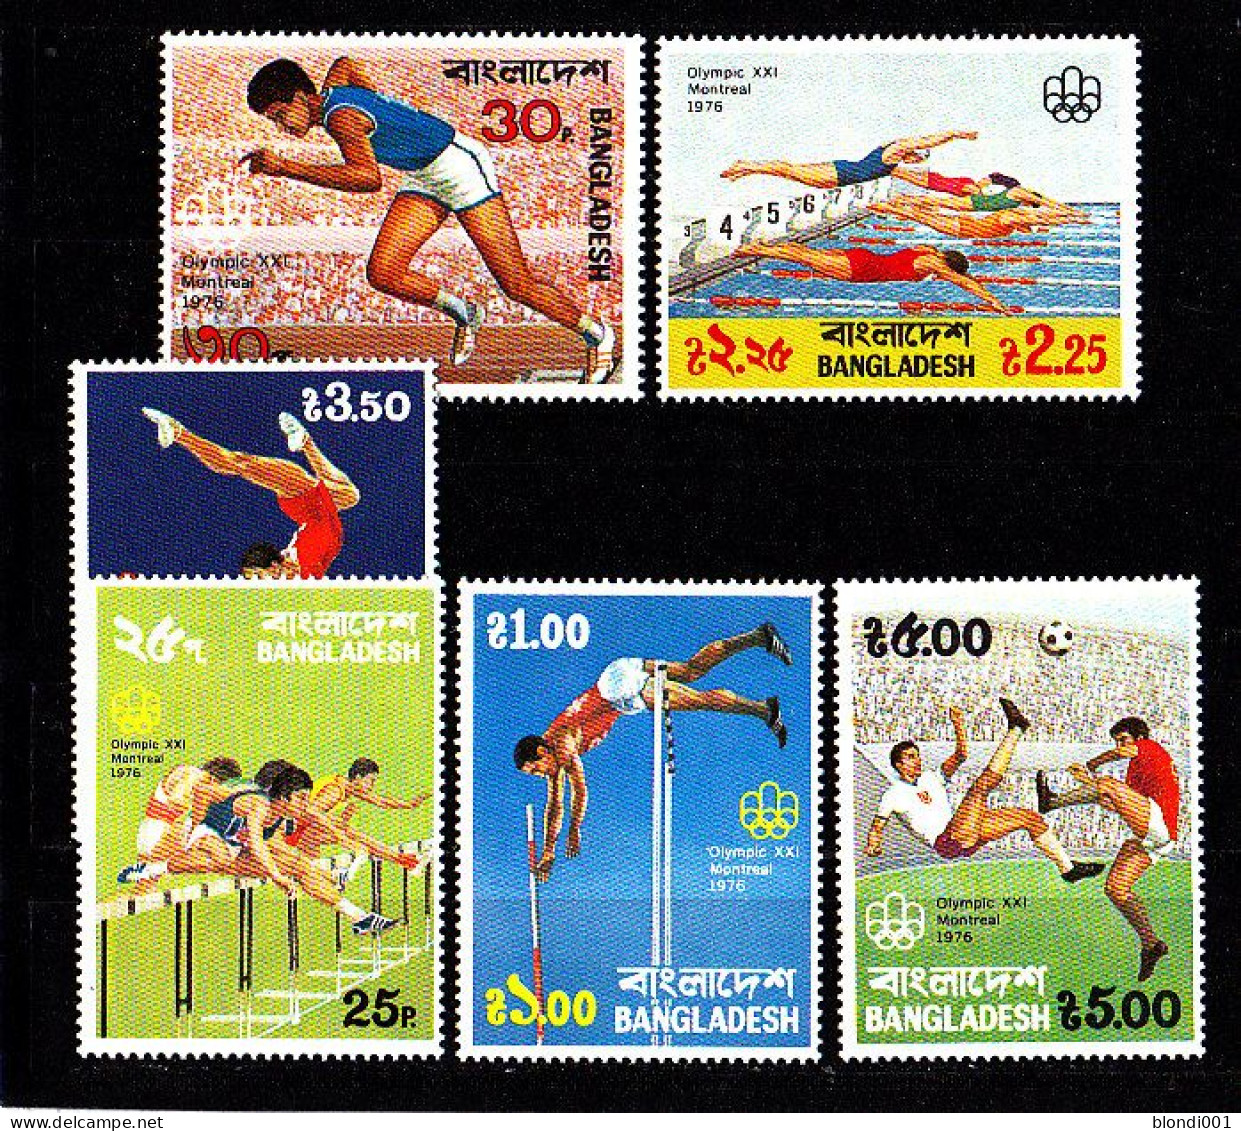 Olympics 1976 - Soccer - BANGLADESH - Set MNH - Estate 1976: Montreal